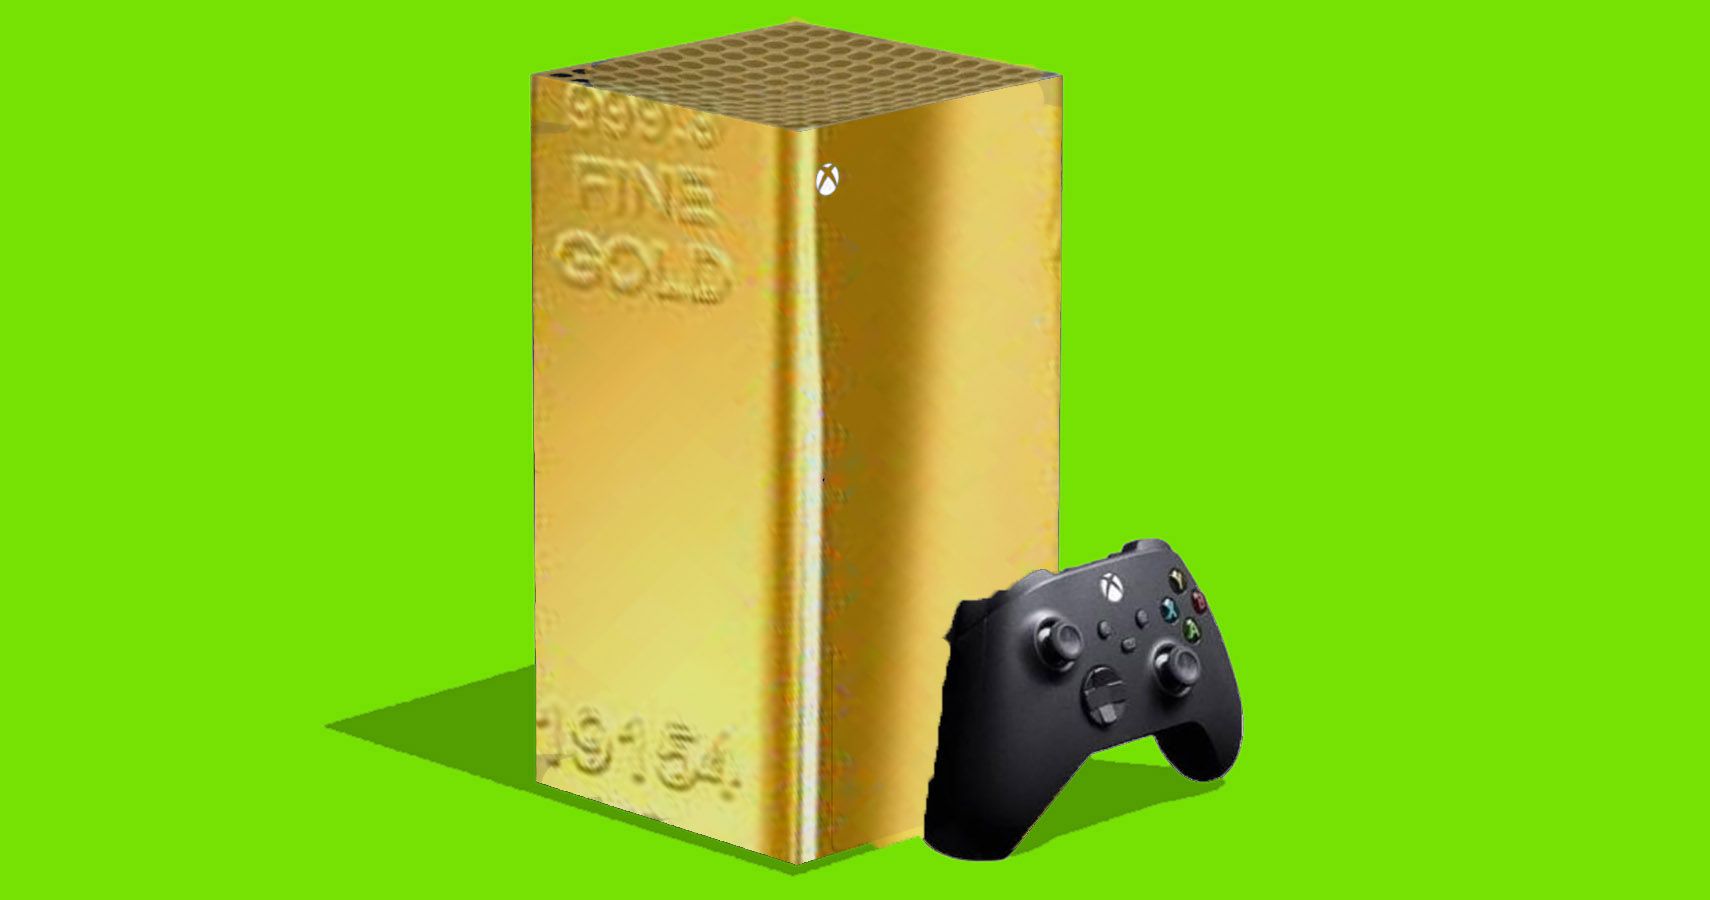 Xbox over gold bar